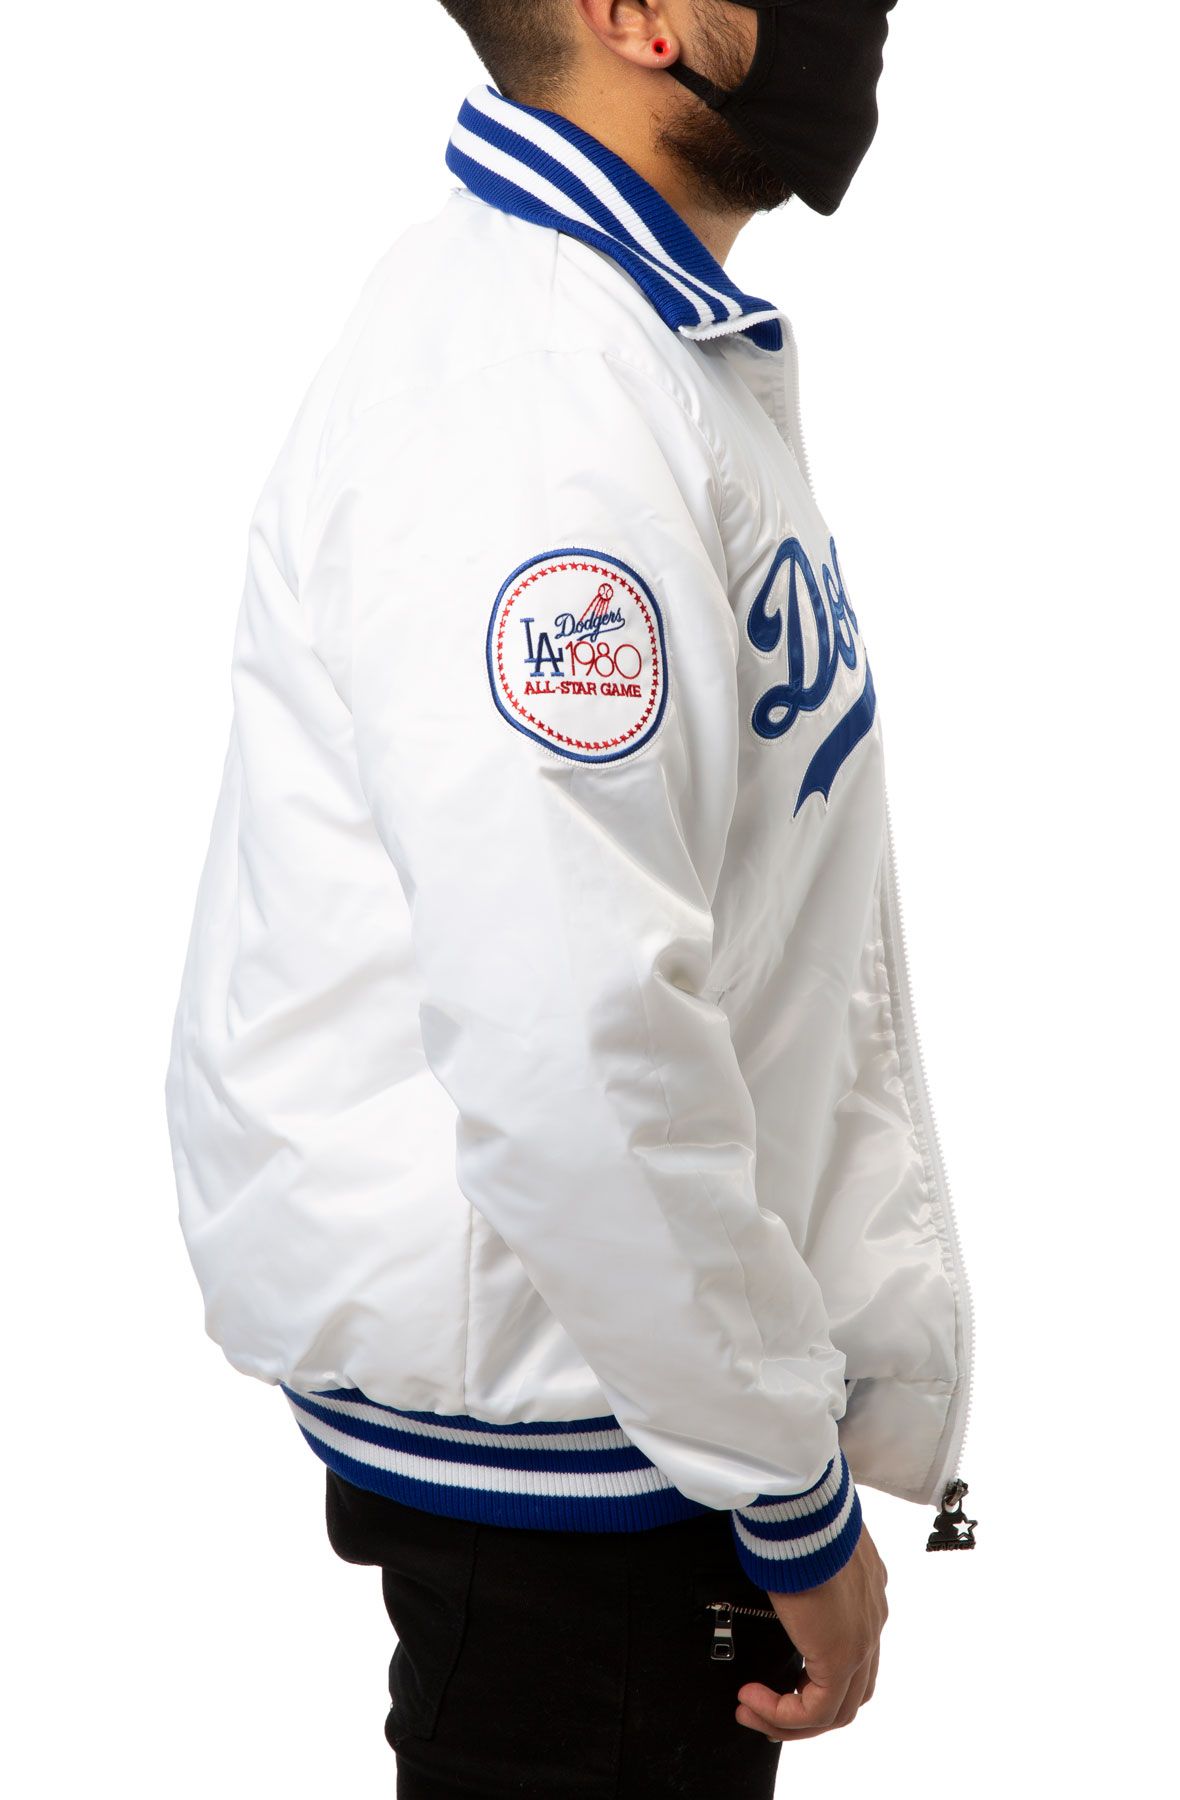 STARTER Los Angeles Dodgers Jacket LS970169LAD - Shiekh